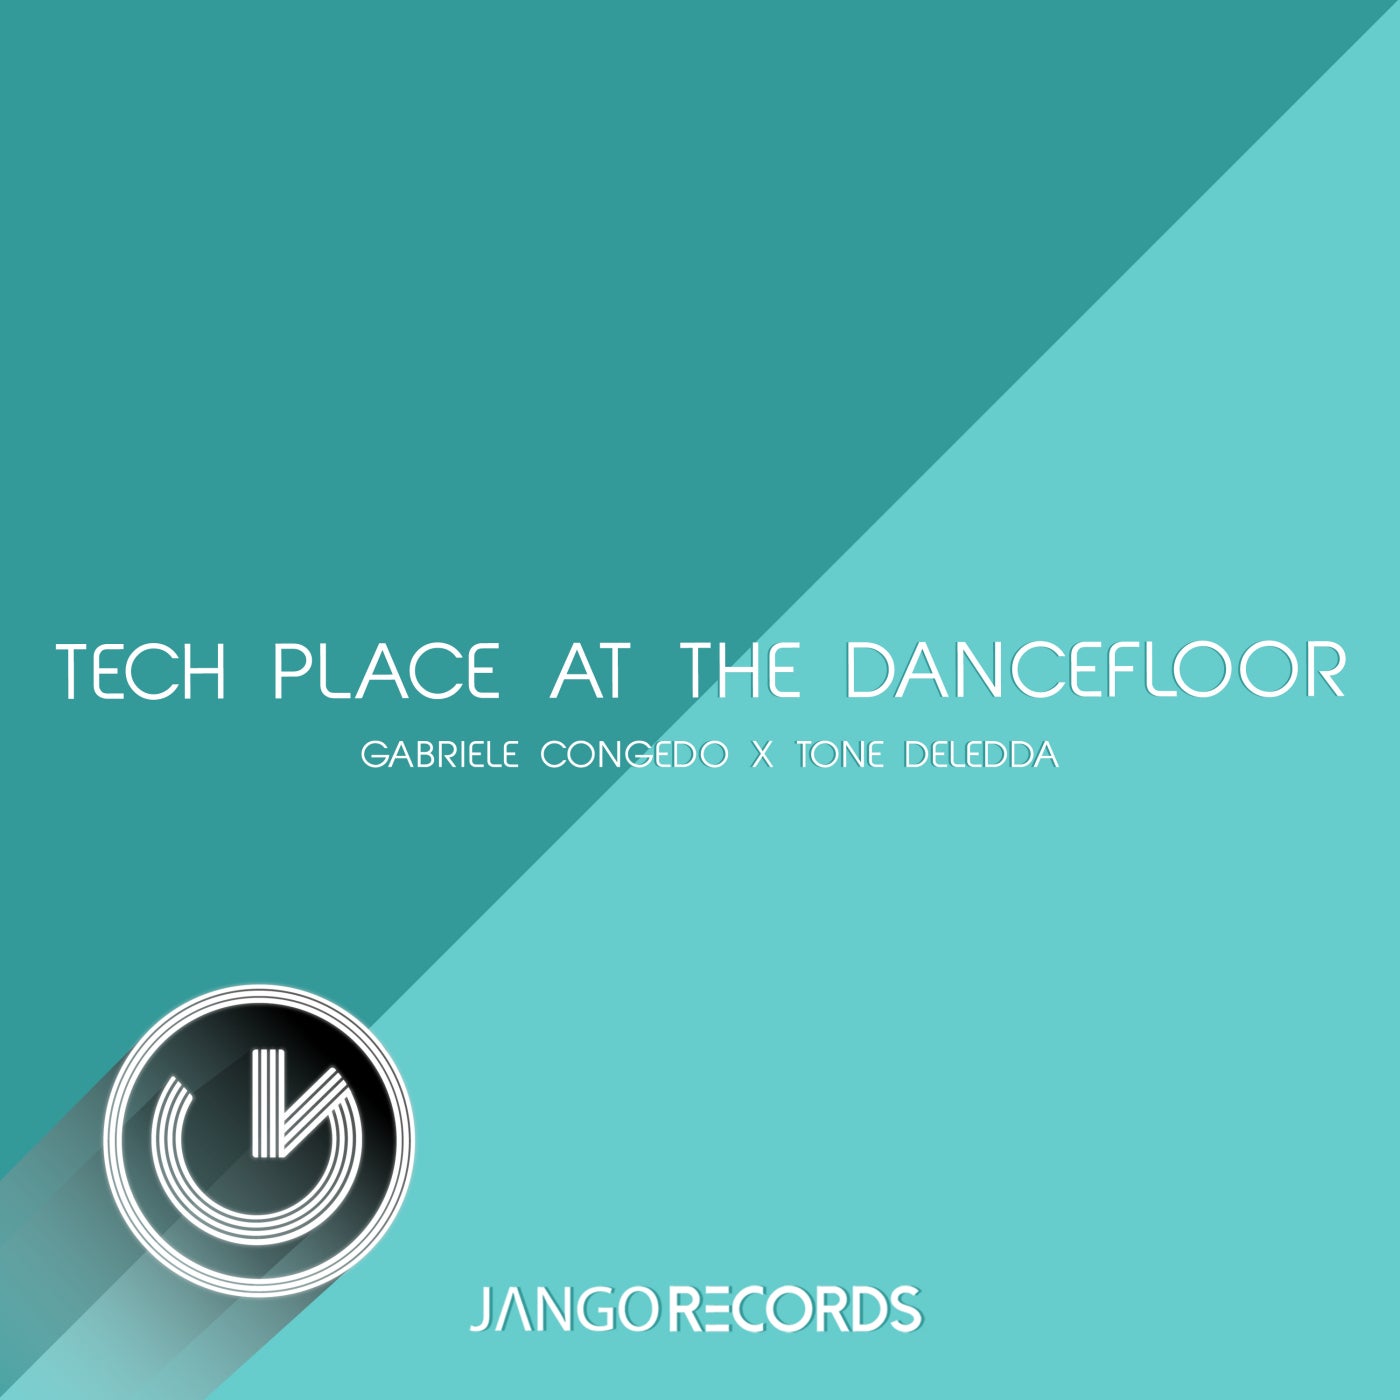 Tech Place at the Dancefloor